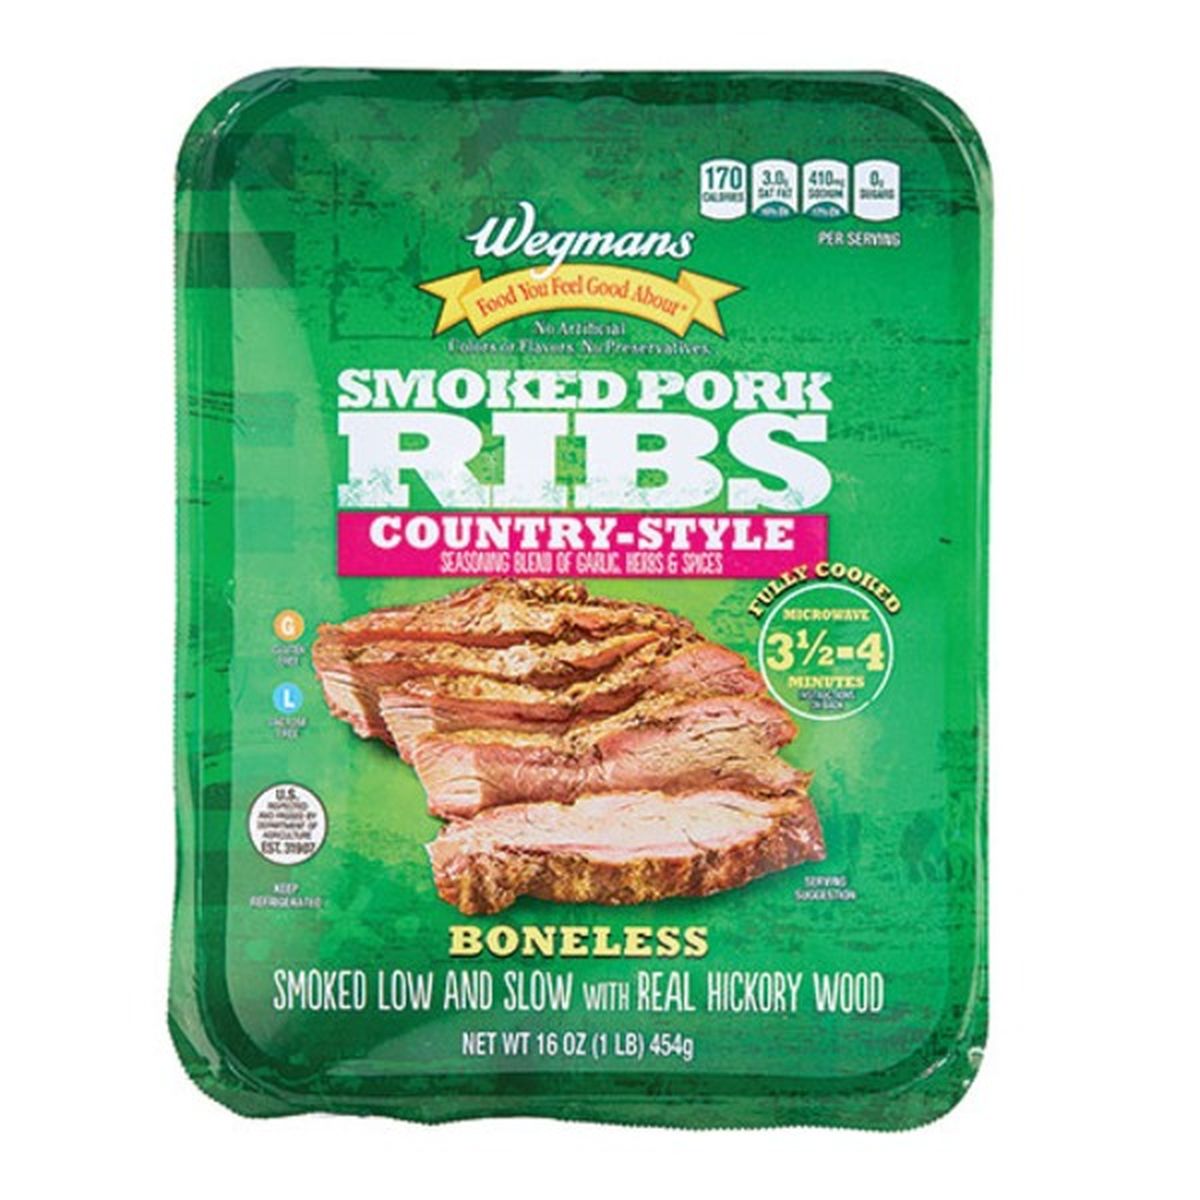 Calories in Wegmans Smoked Boneless Pork Ribs Country-Style